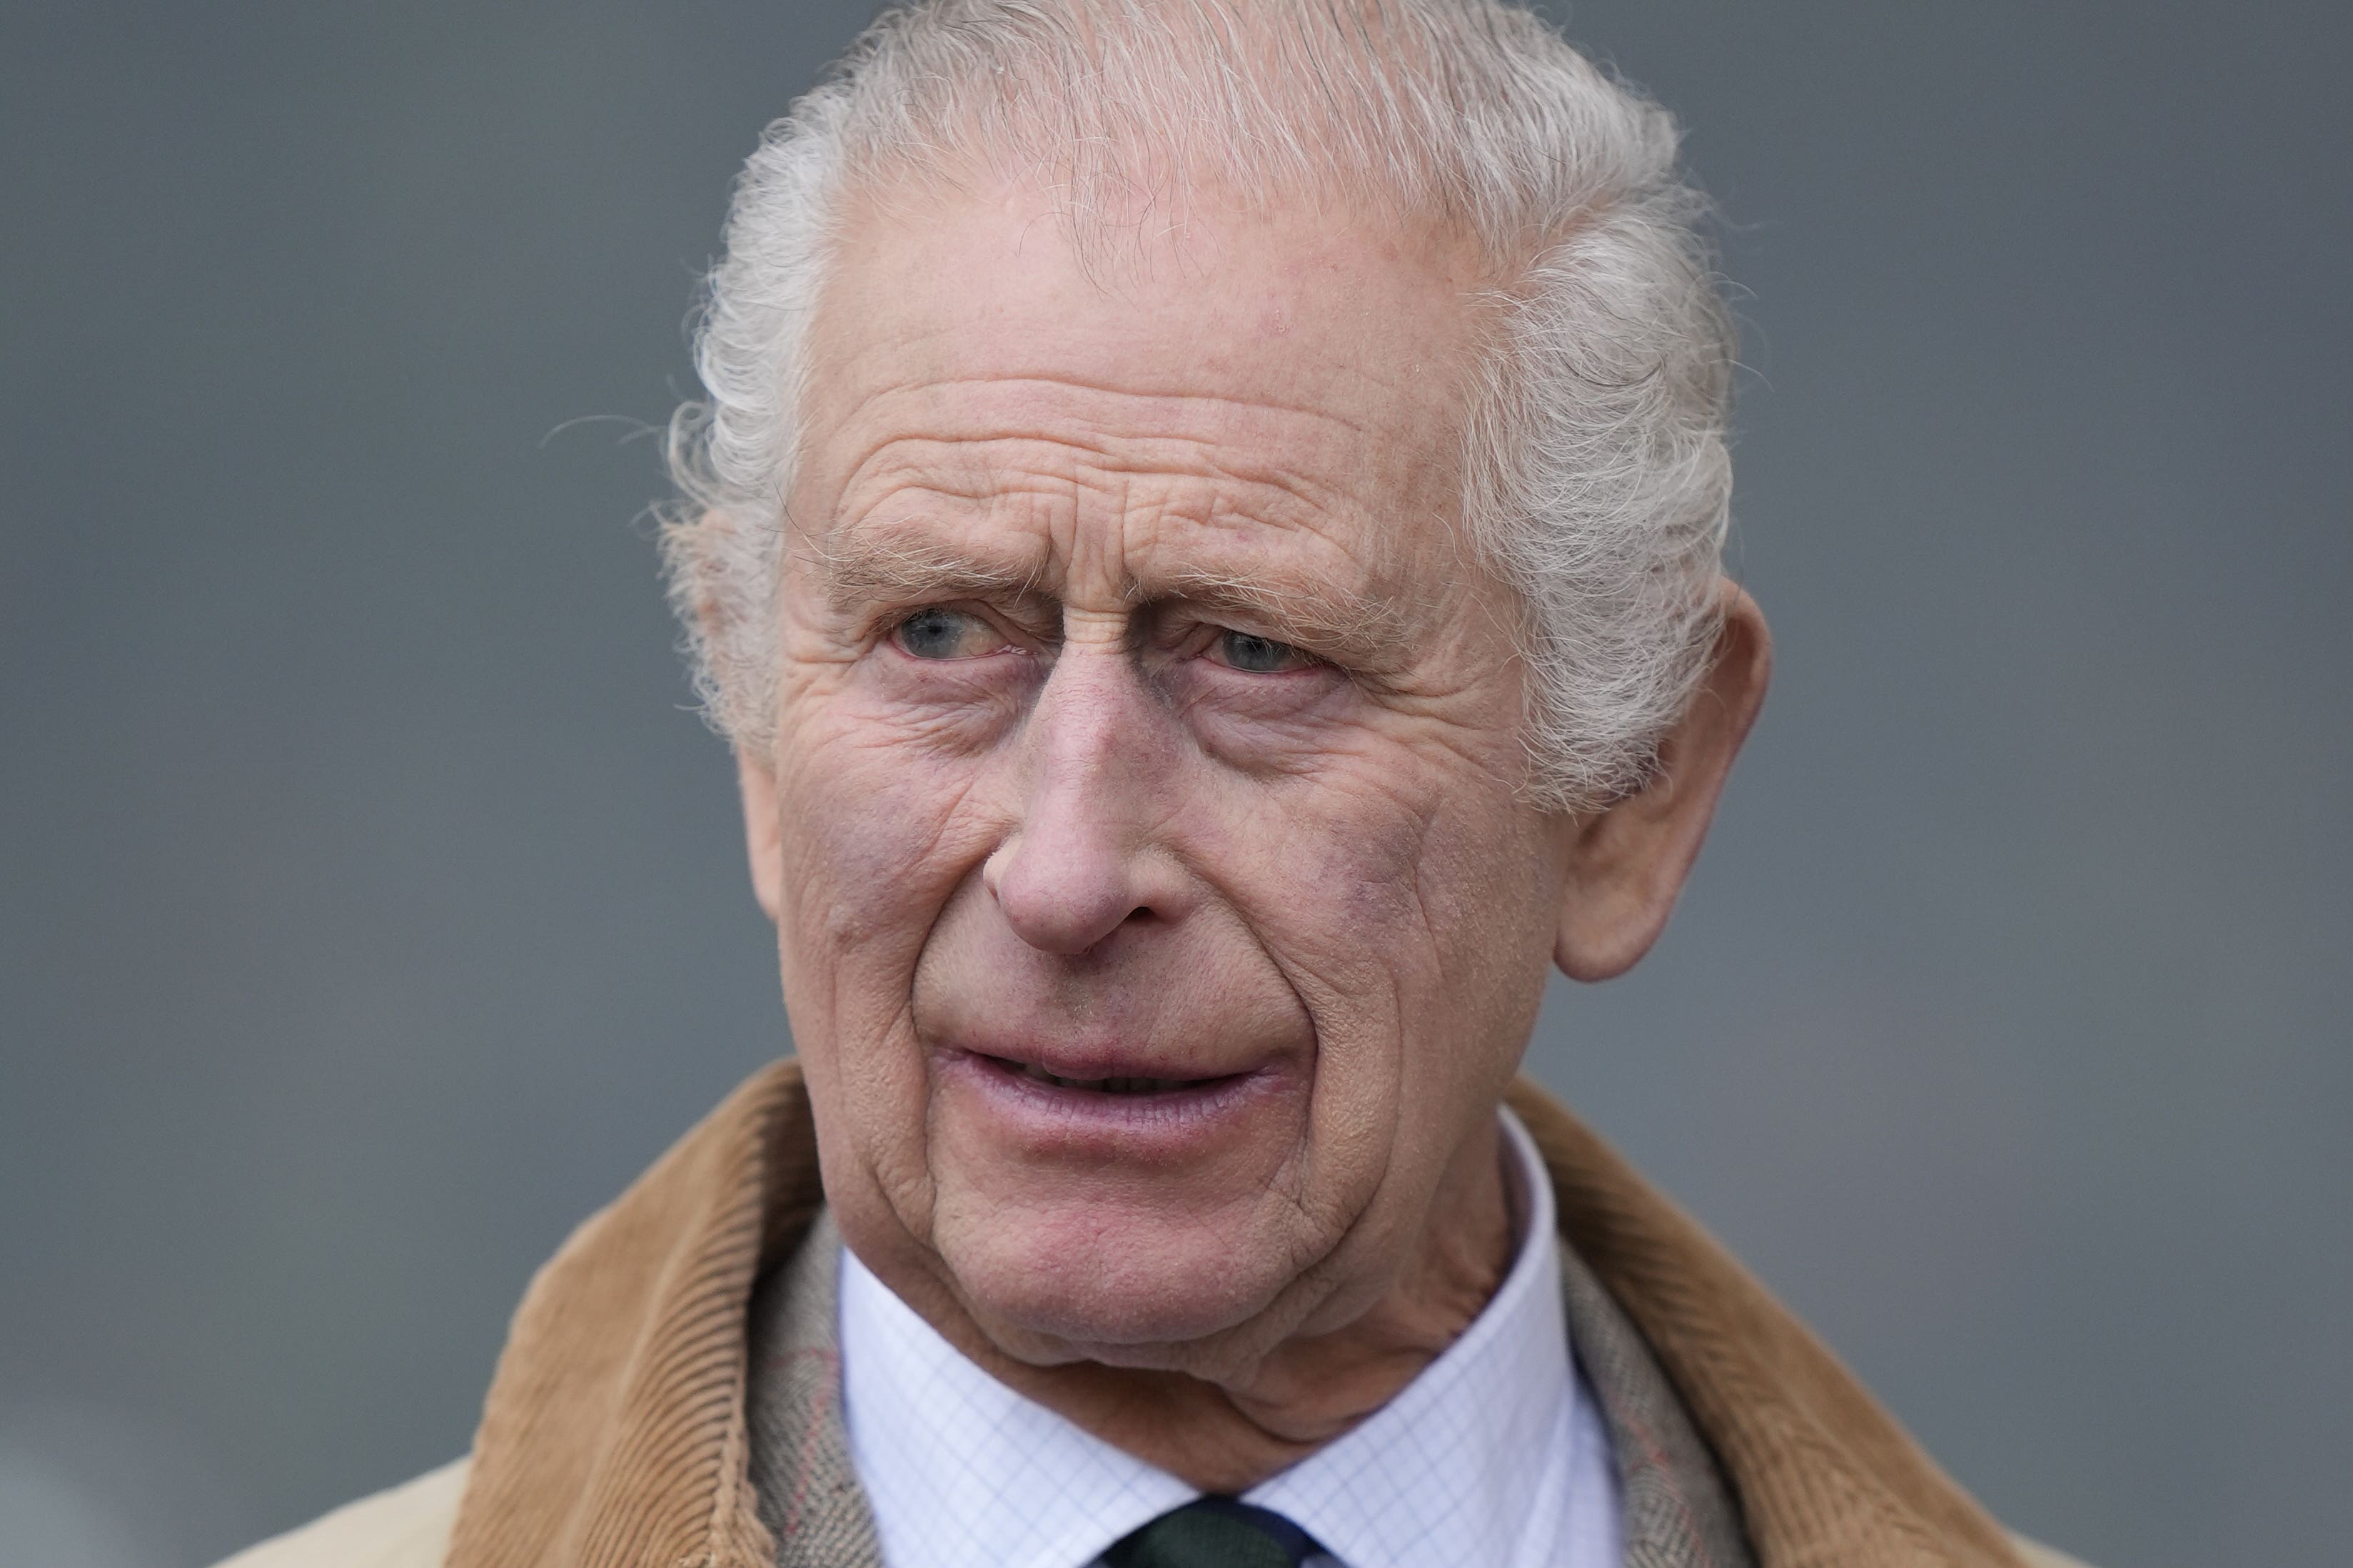 Gordonstoun School in Scotland praised King Charles for accepting their patronage